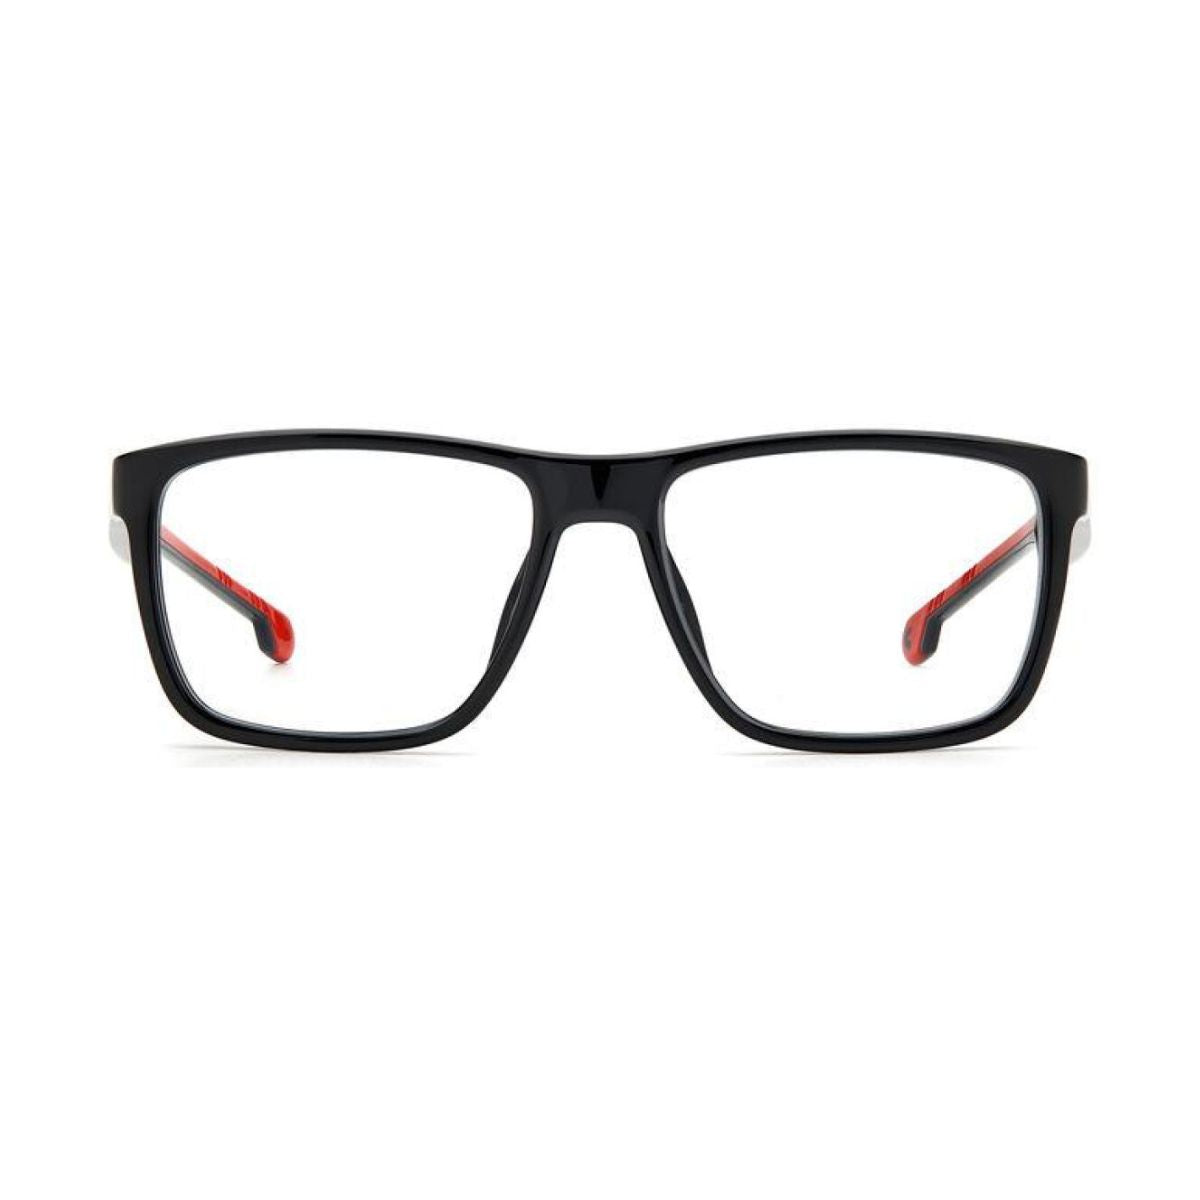 "Carrera CARDUC 010 OIT trendy eyewear frame for men's online at optorium"